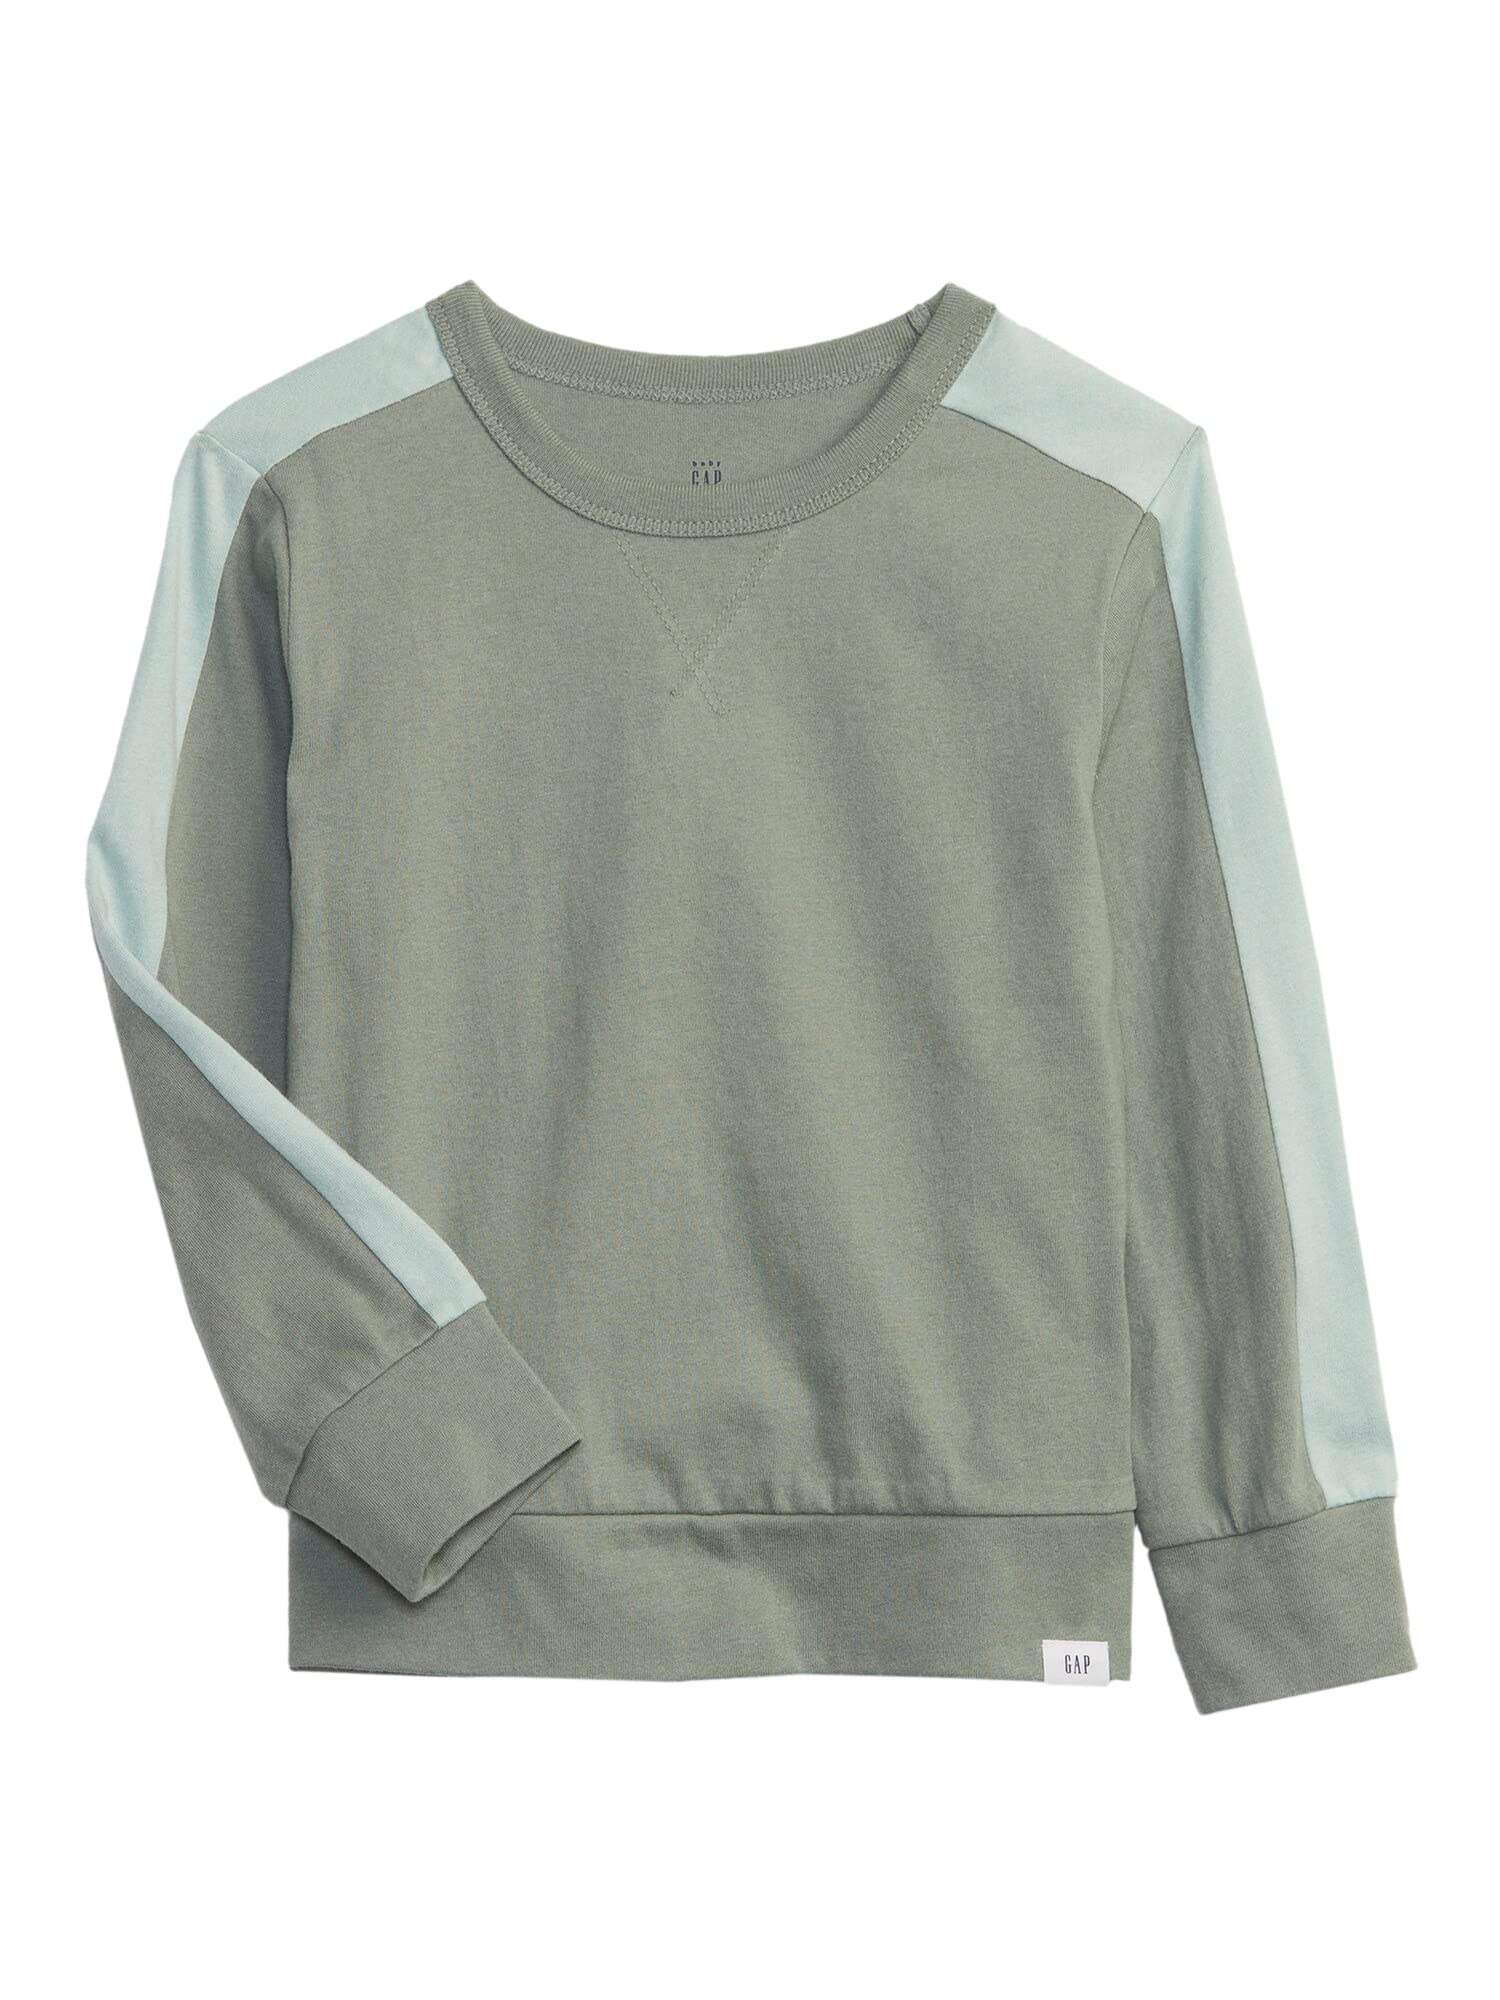 GAP Baby Boys Long Sleeve Jersey Knit Top Shirt, Gasoline Green, 3-6 Months US